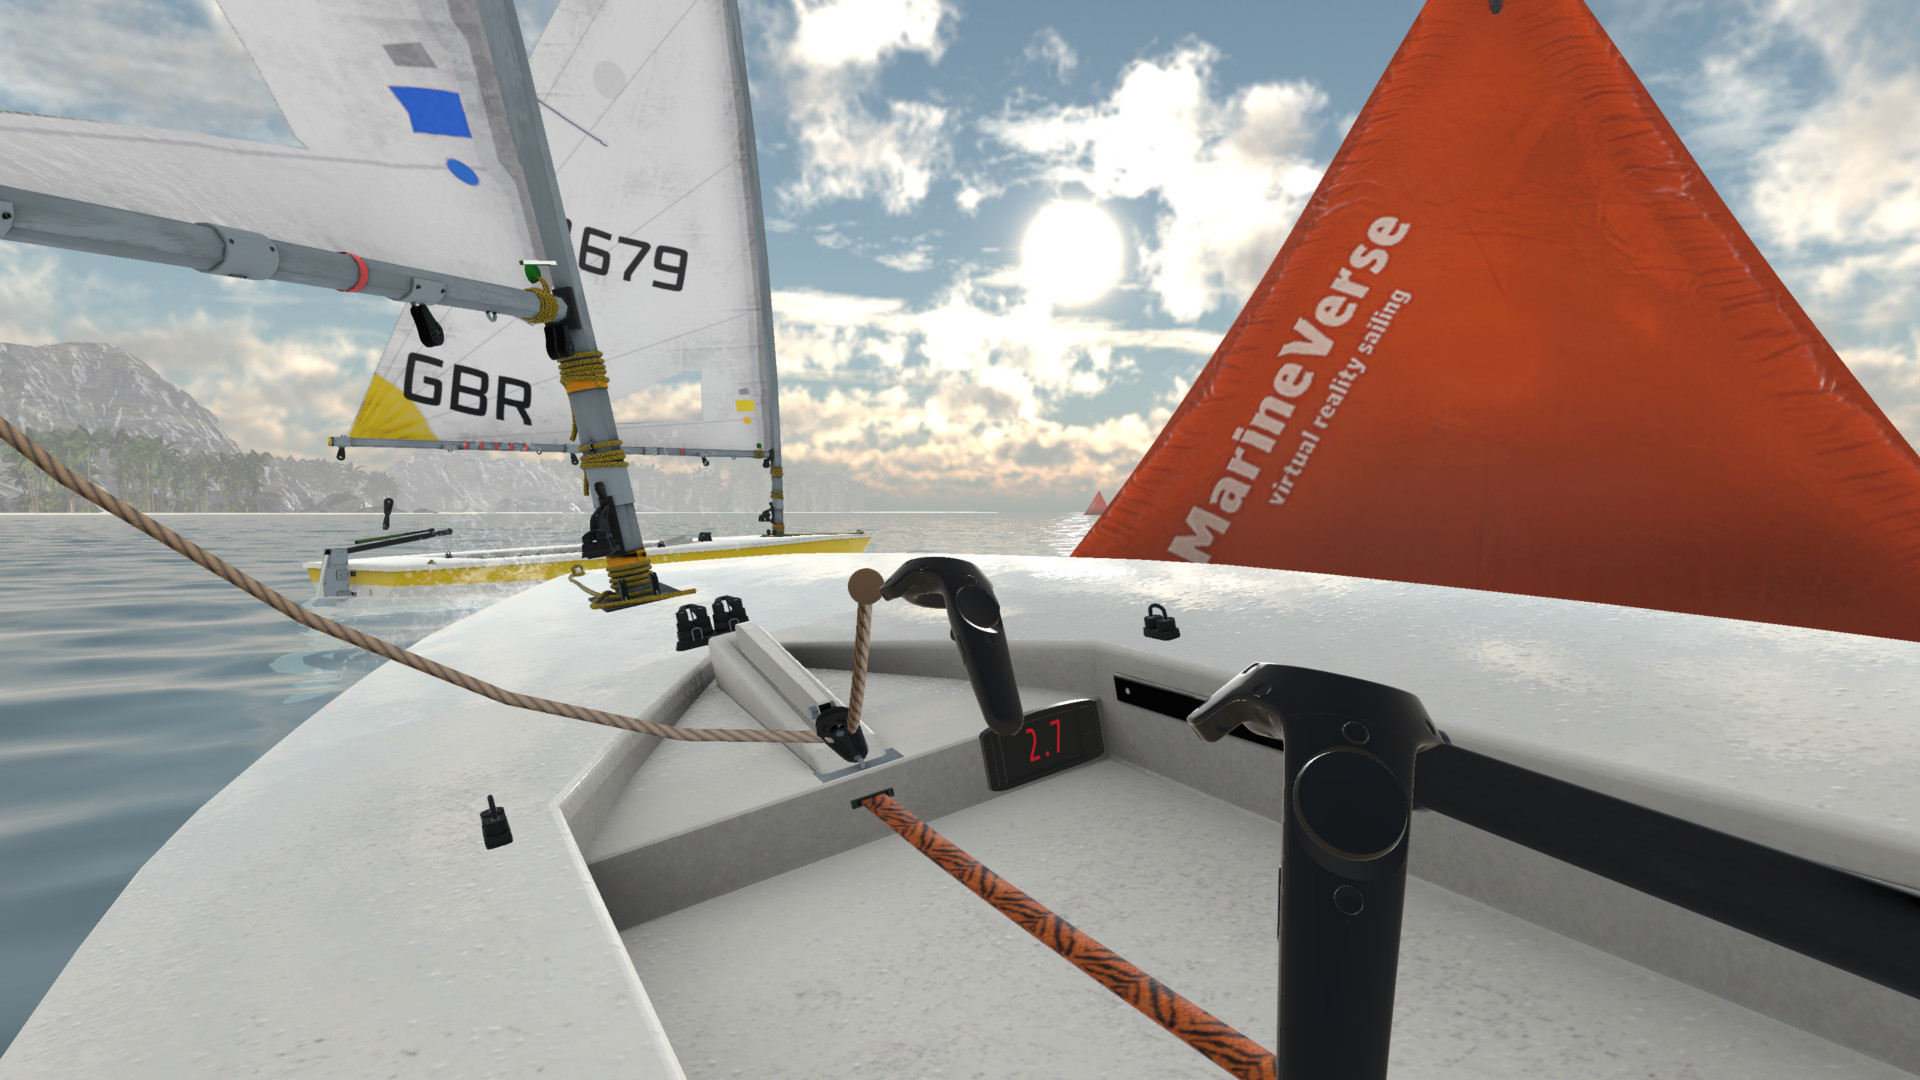 MarineVerse's Sailboat Racing Training screenshot